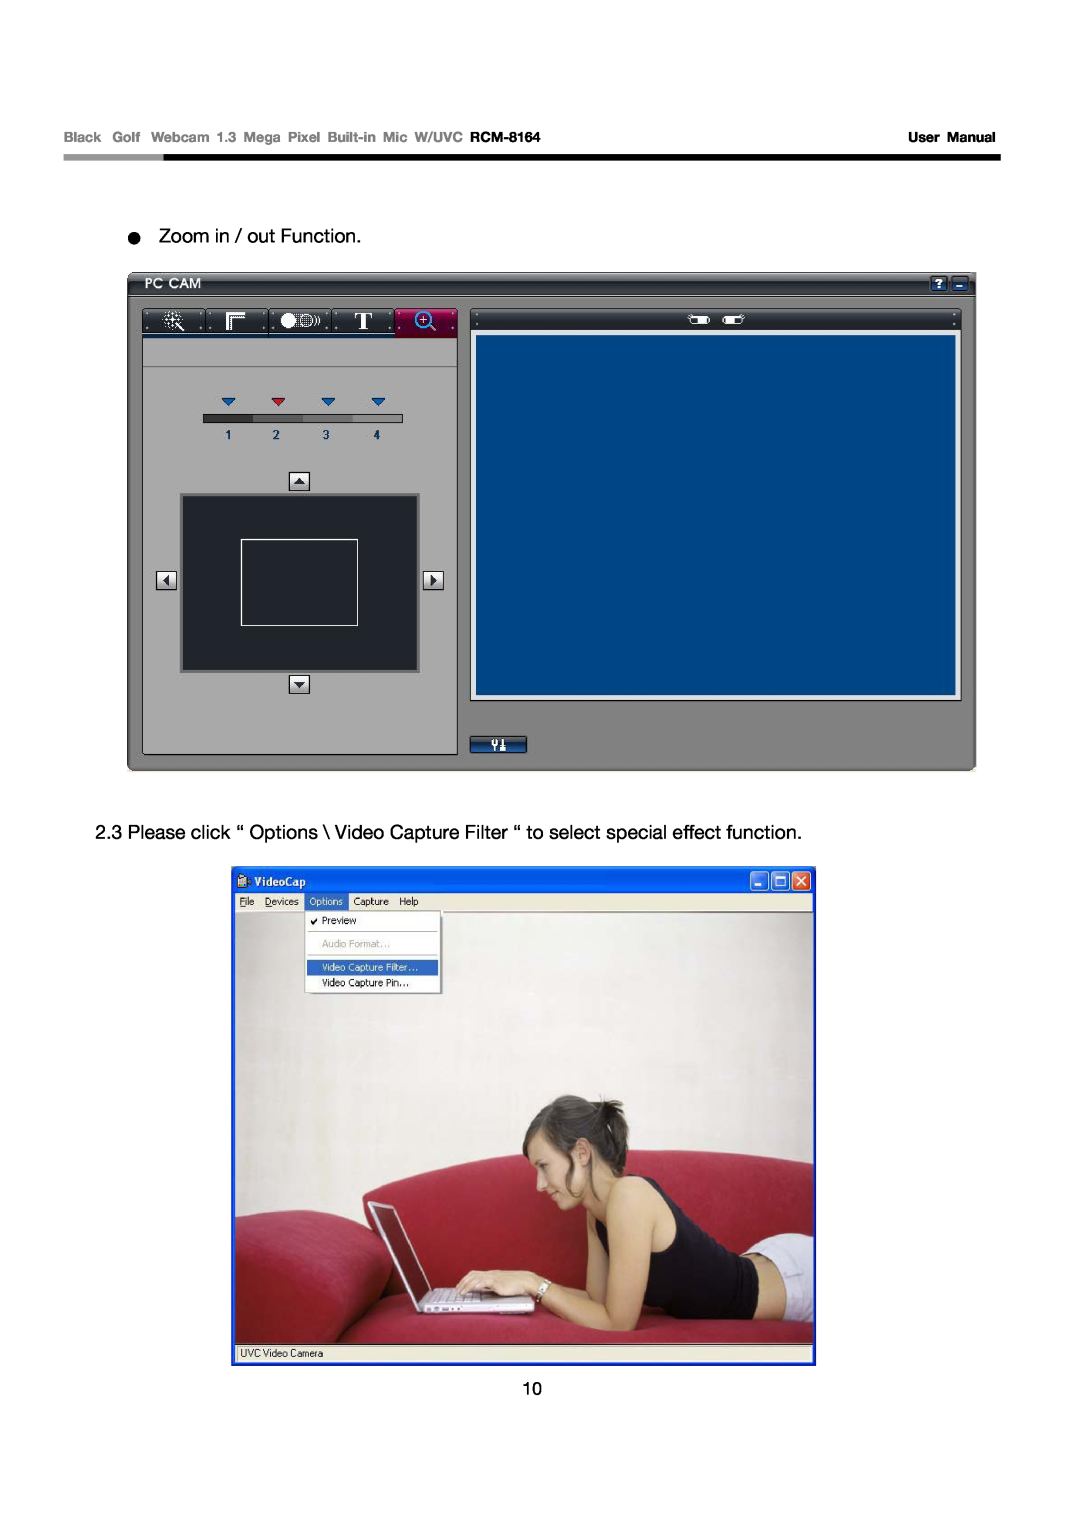 Rosewill user manual Zoom in / out Function, Black Golf Webcam 1.3 Mega Pixel Built-in Mic W/UVC RCM-8164, User Manual 